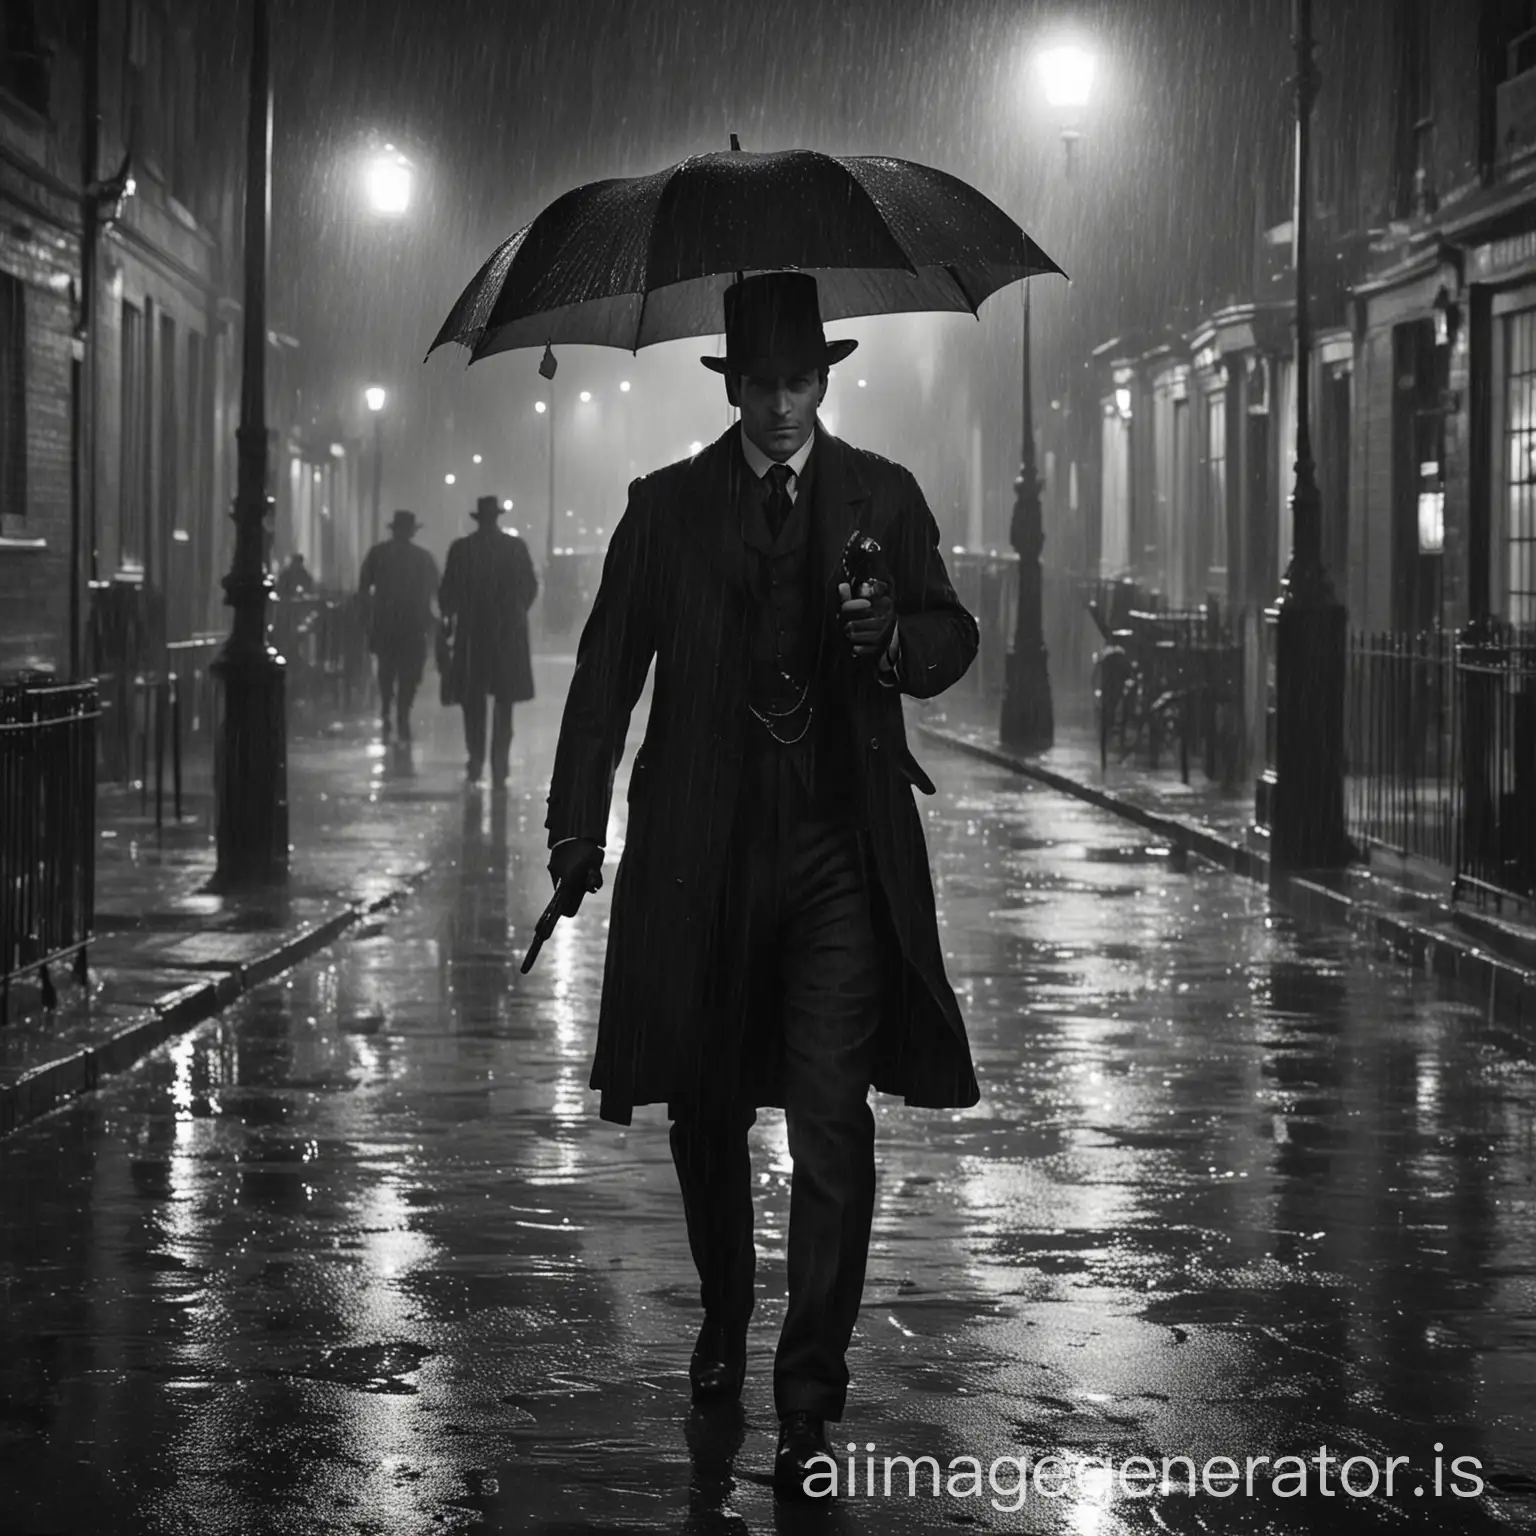 Victorian-Gentleman-Walking-Alone-in-Rainy-London-Street-at-Night